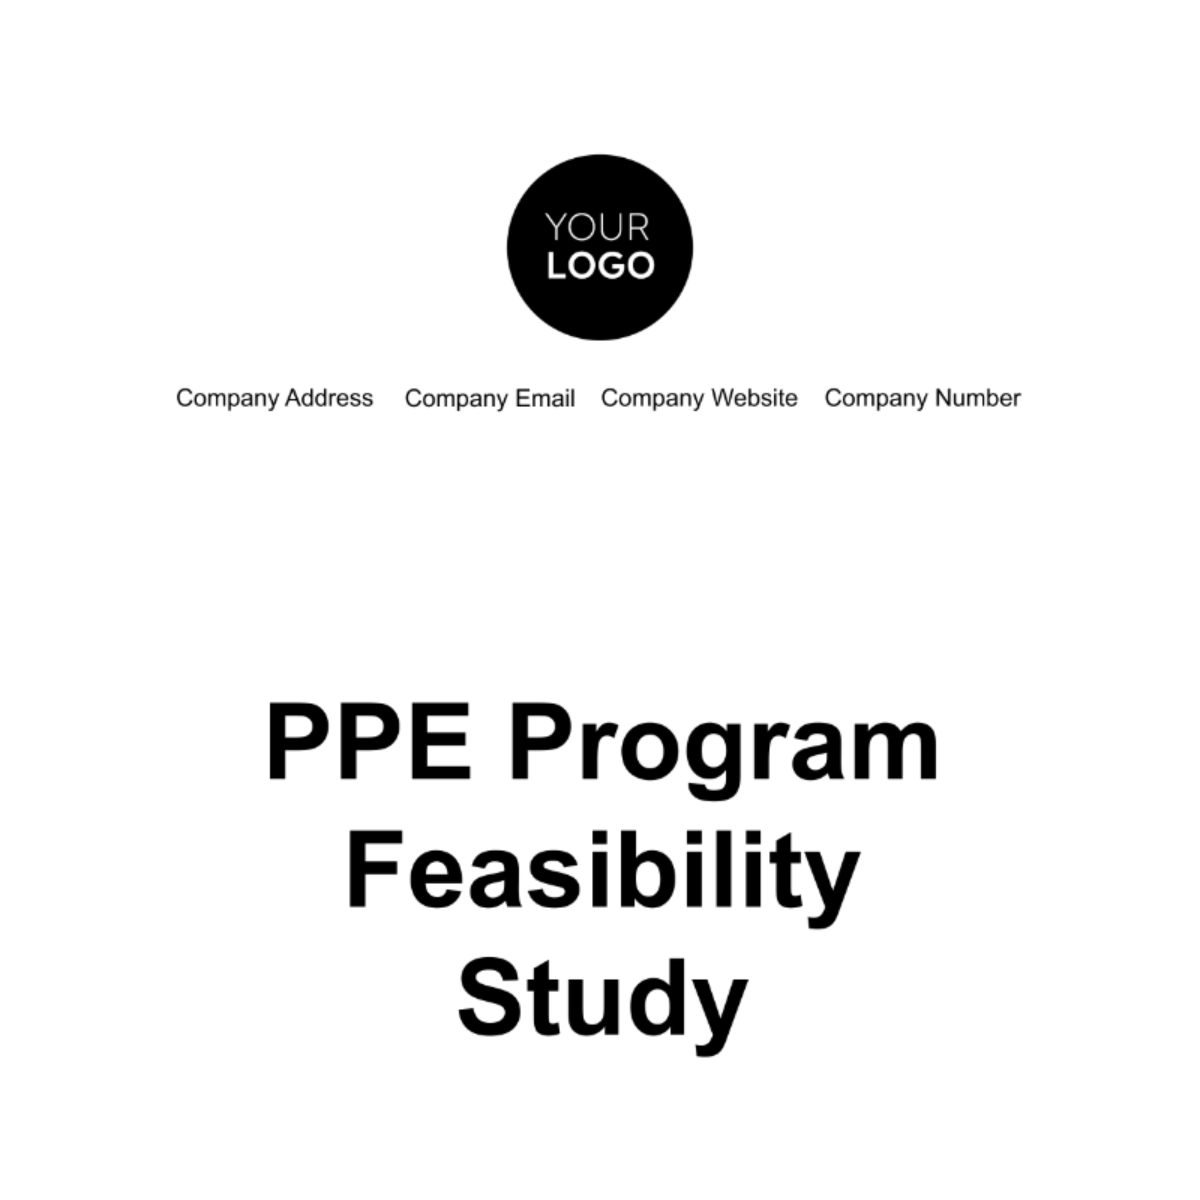 PPE Program Feasibility Study Template